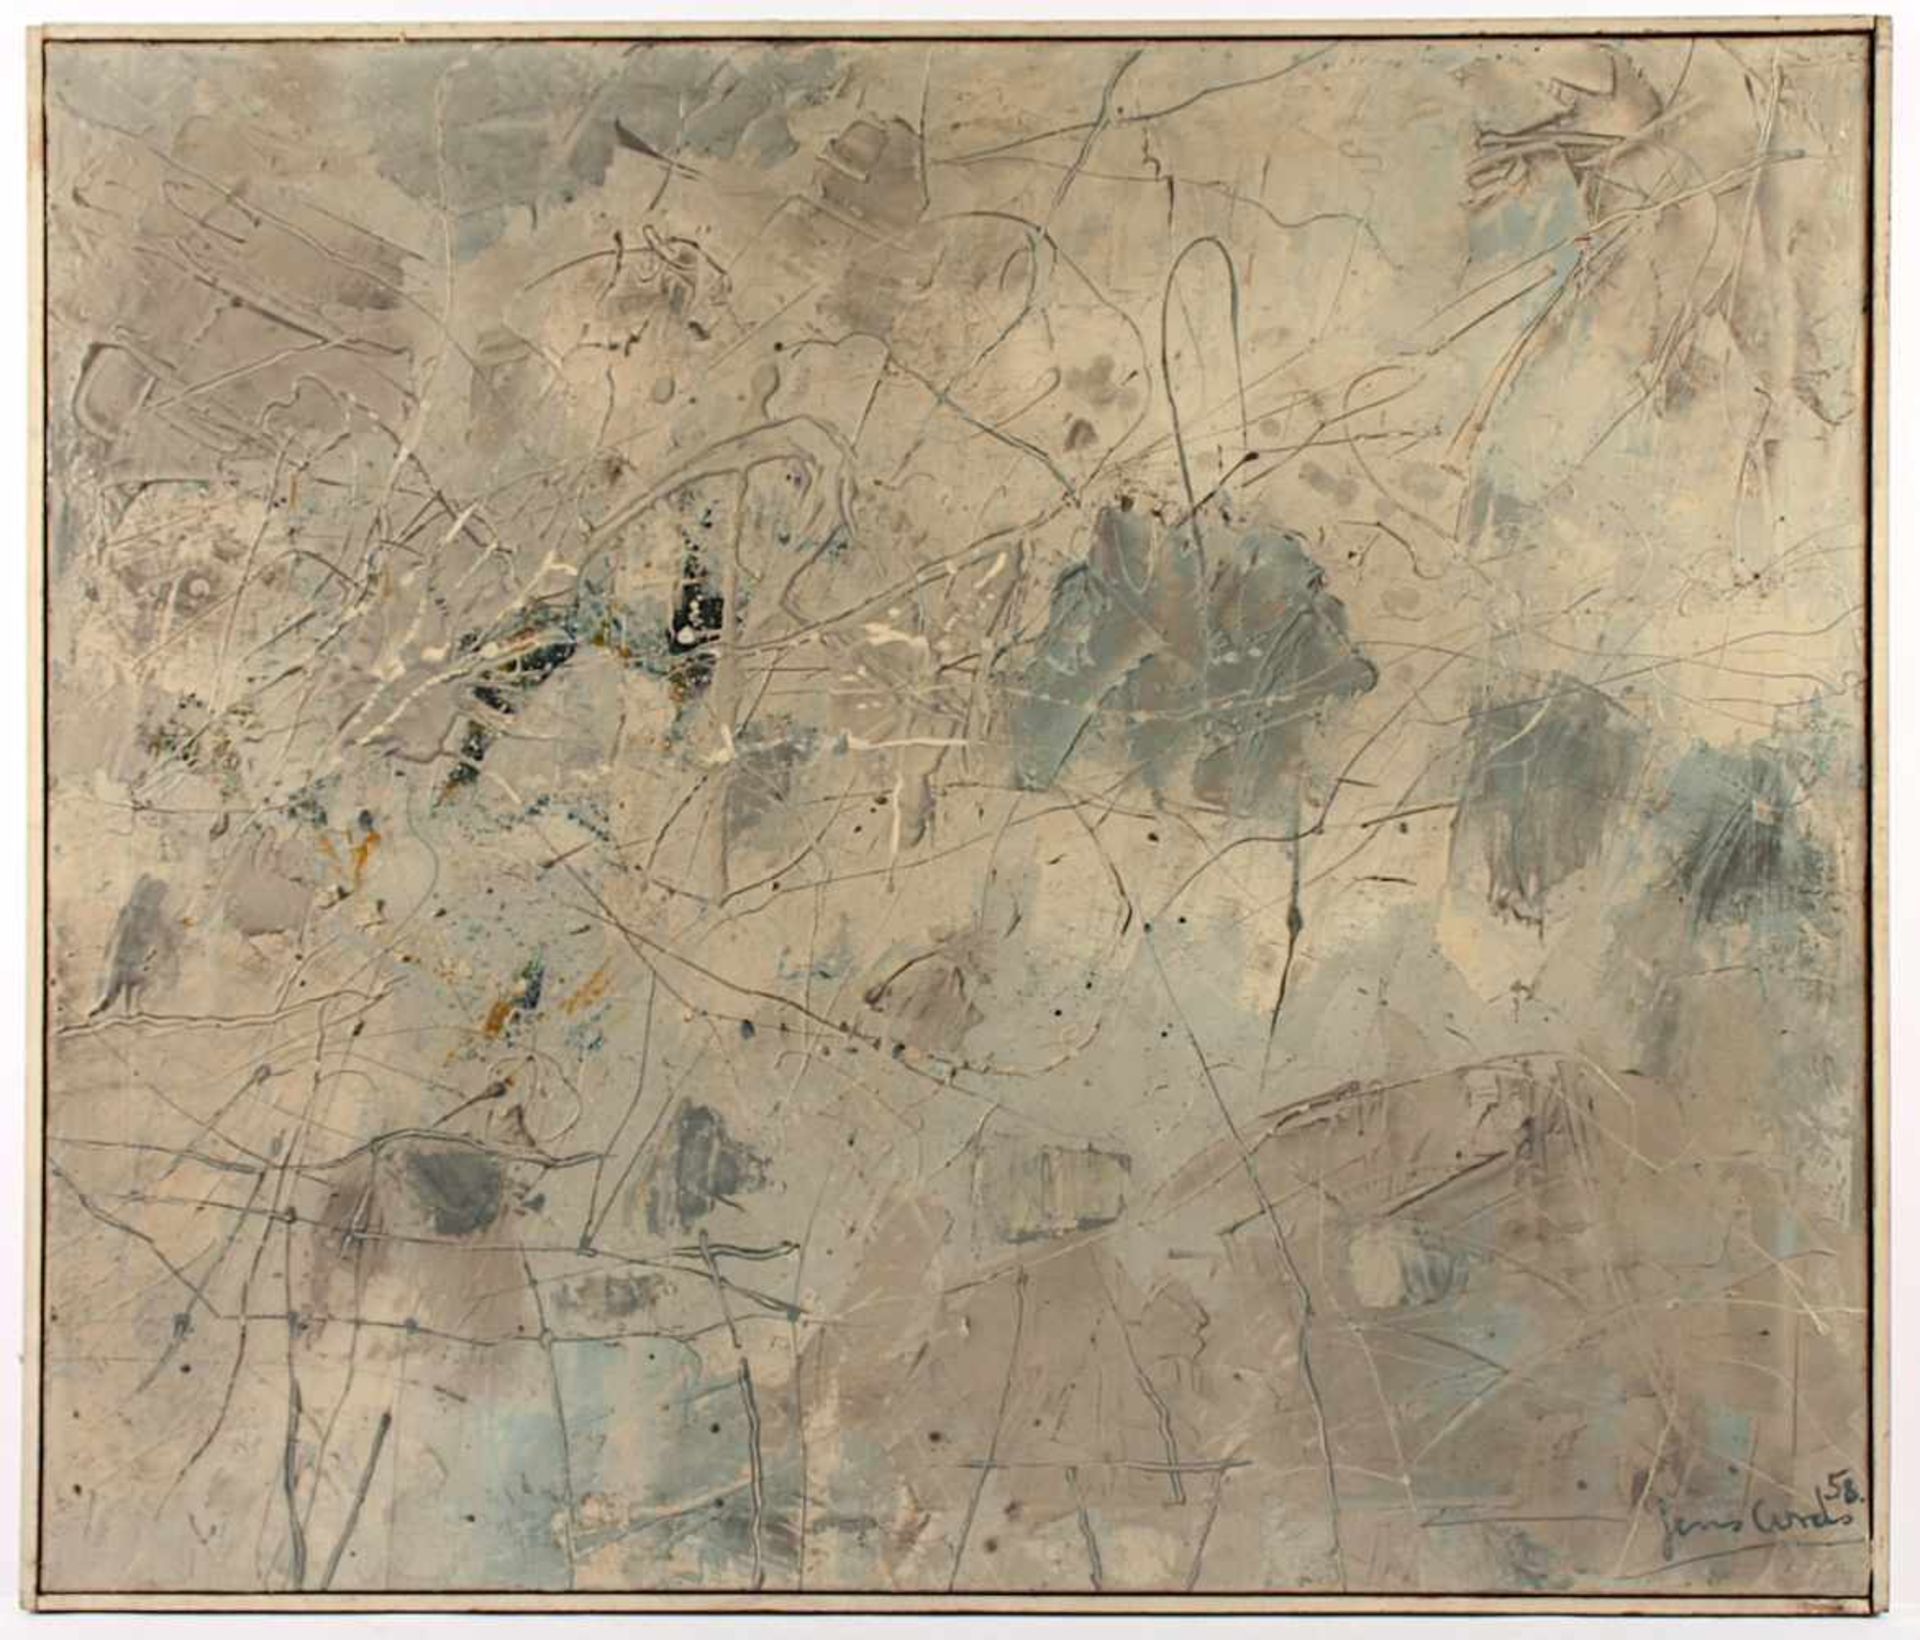 CORDS, Jens, "Helle Zone", Öl/Lwd., 81 x 95, unten rechts signiert und datiert '58, verso signiert